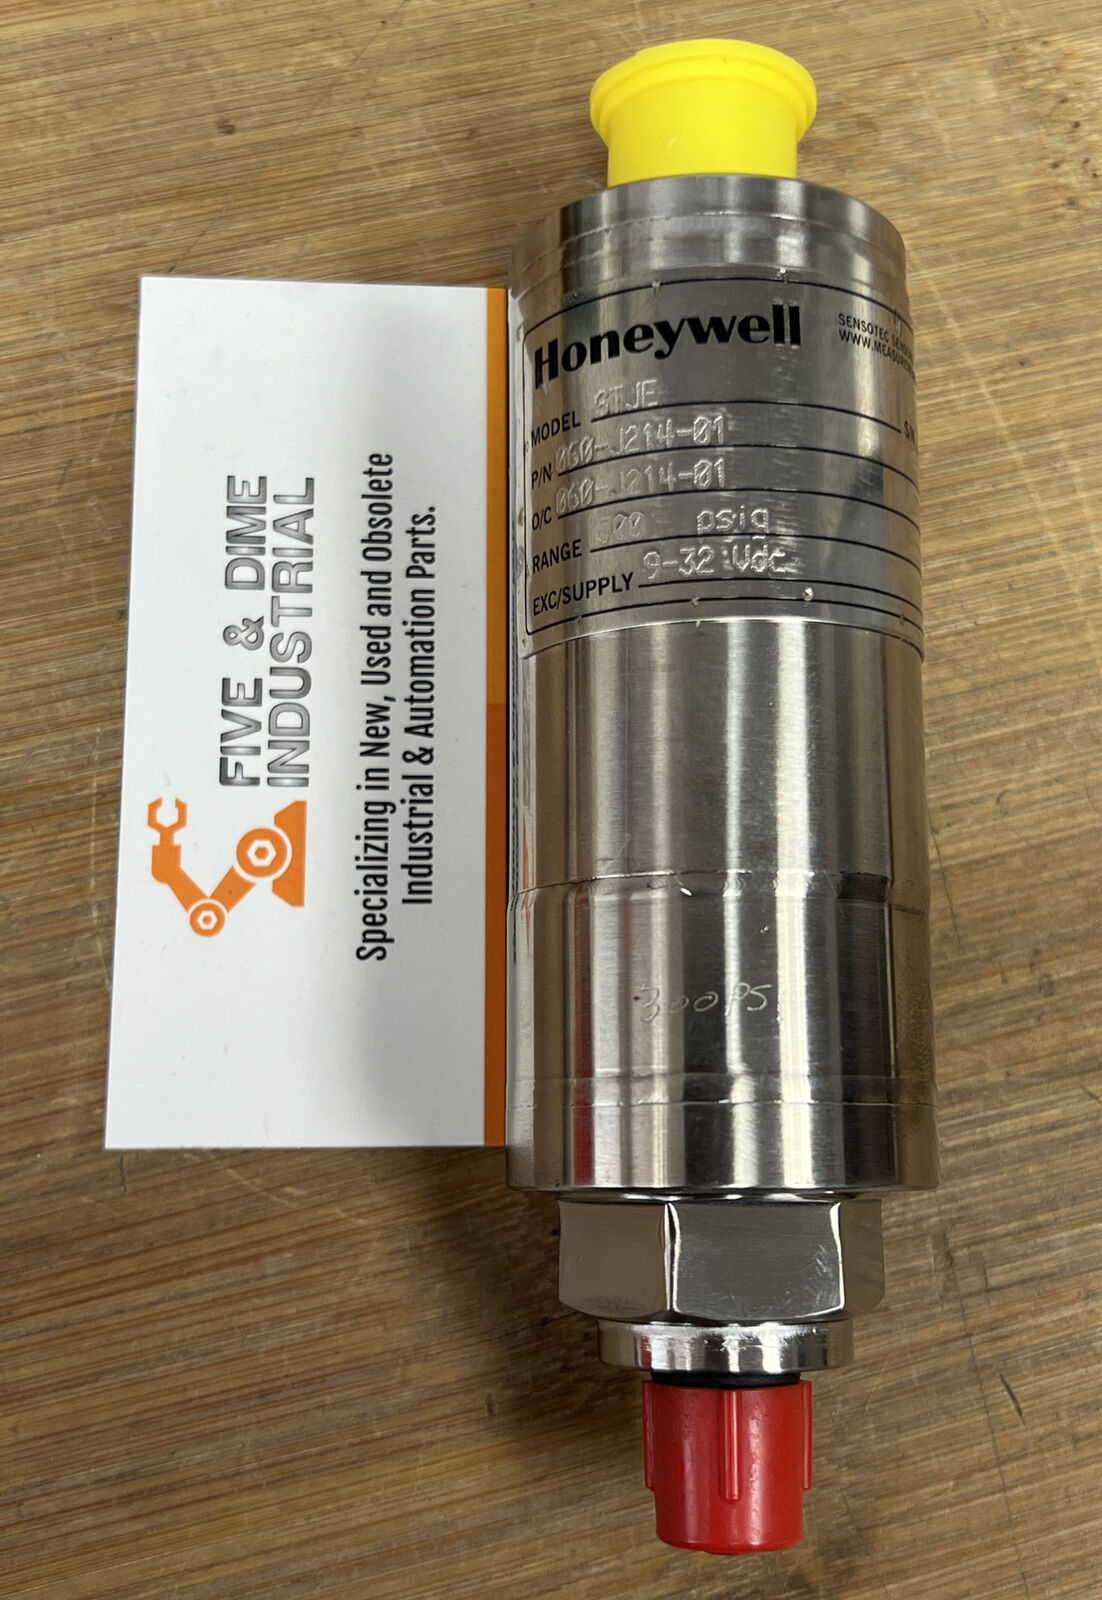 Honeywell 300 PSI STJE Pressure Transducer 060-J214-01 (GR194)